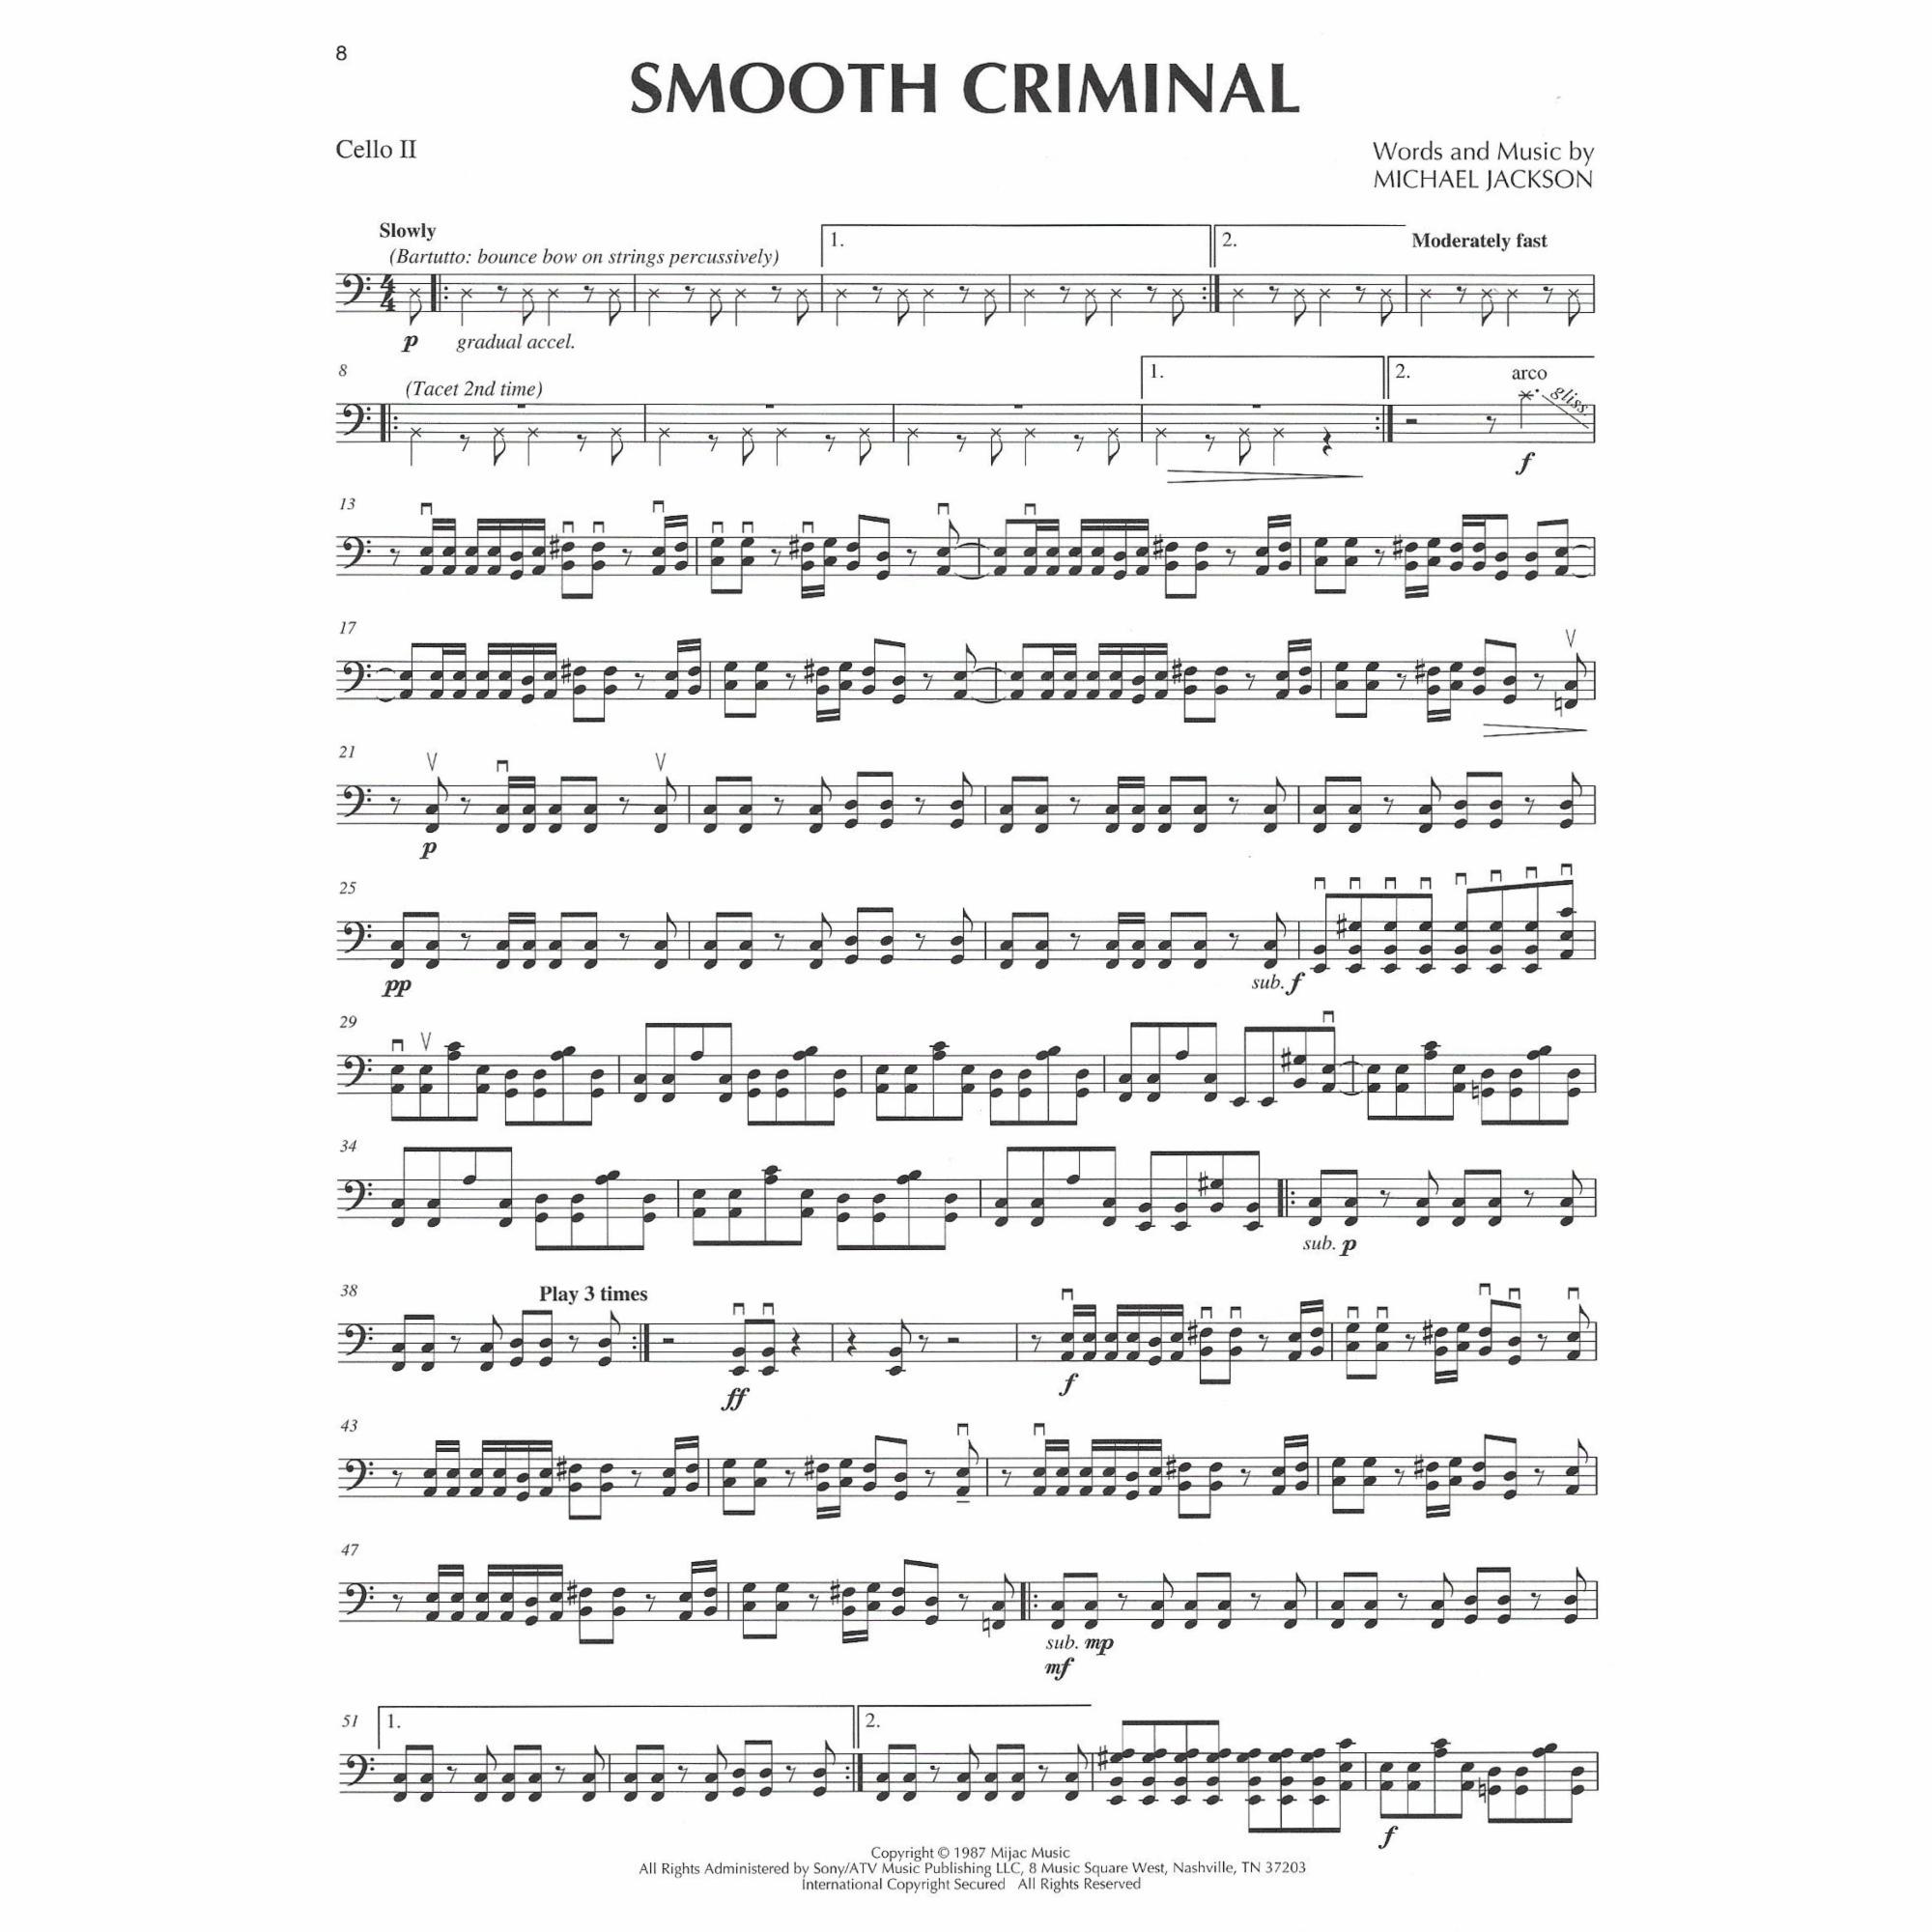 Sample: Cello II (Pg. 8)